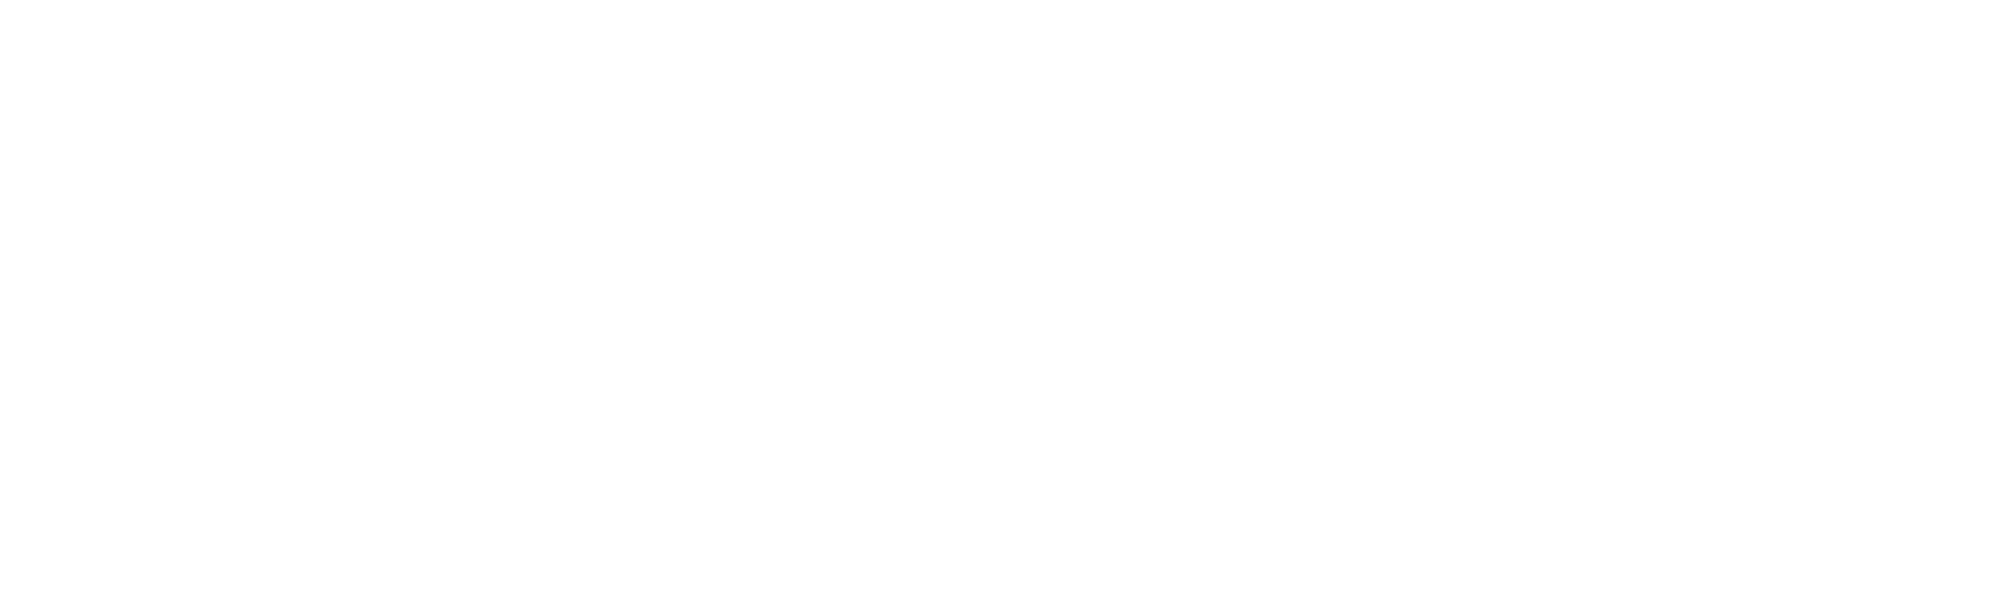 NRL logo symbol